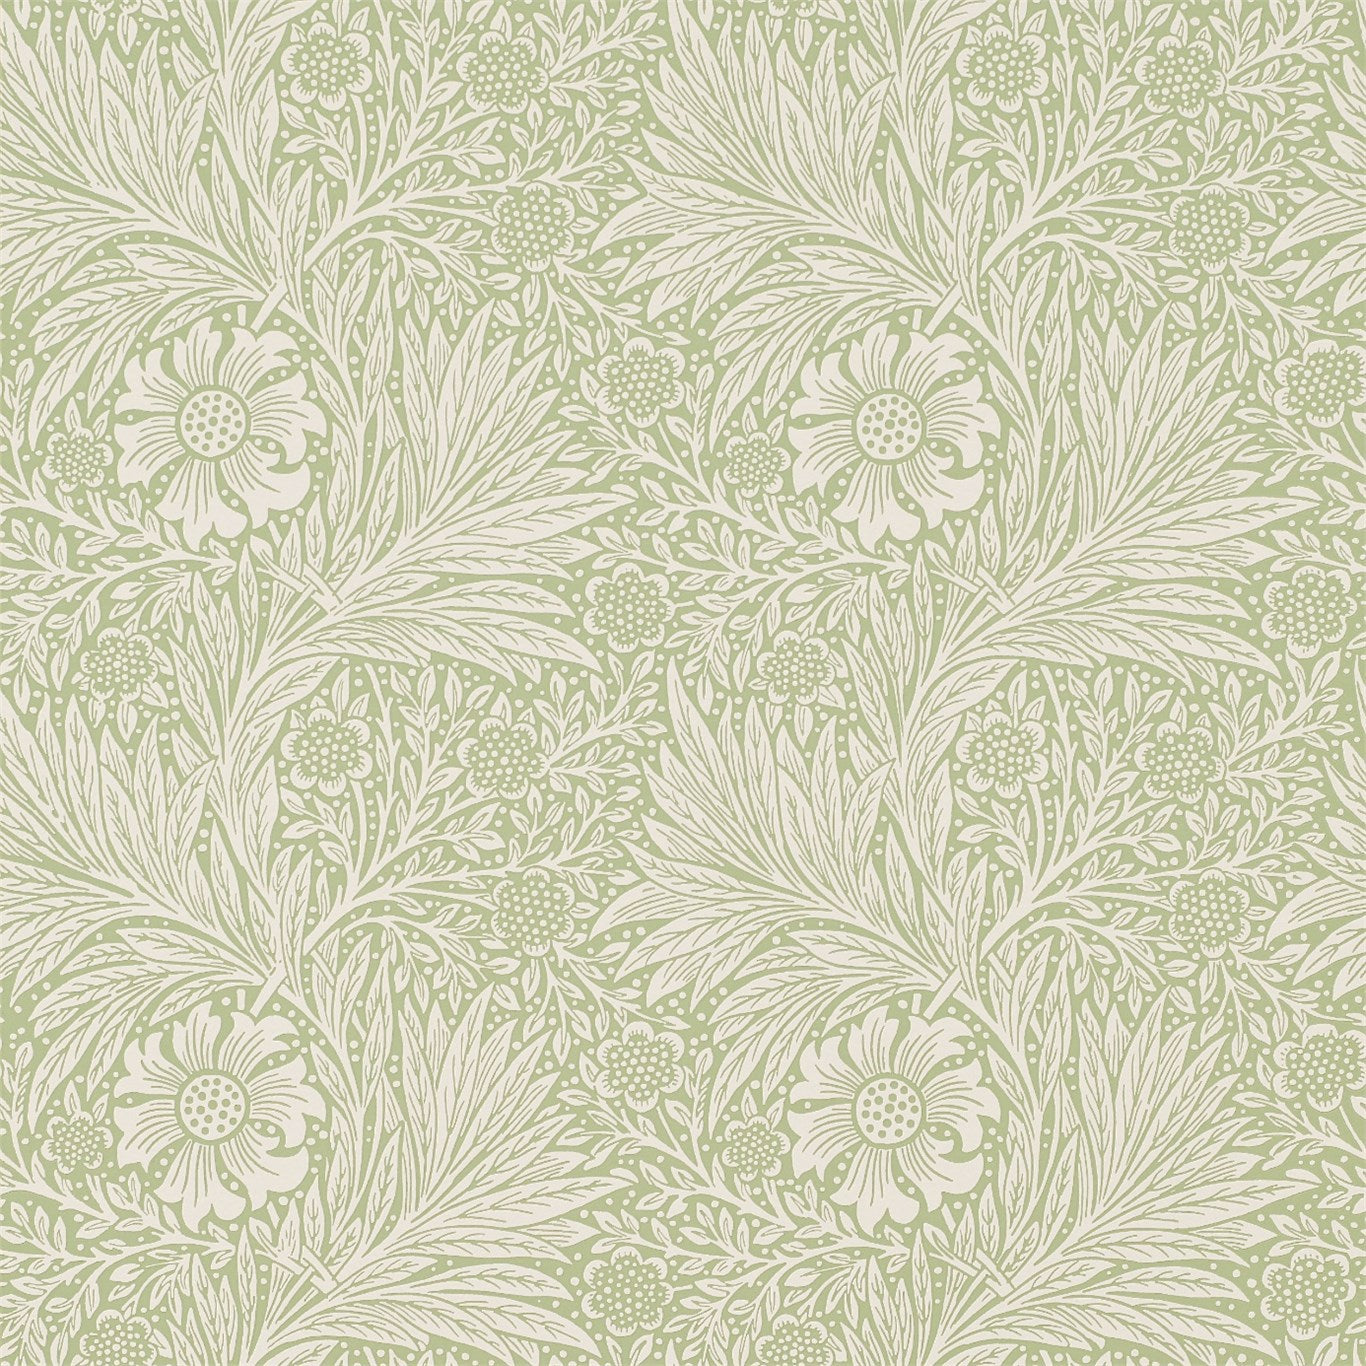 Marigold Artichoke Wallpaper DM6P210369 by Morris & Co